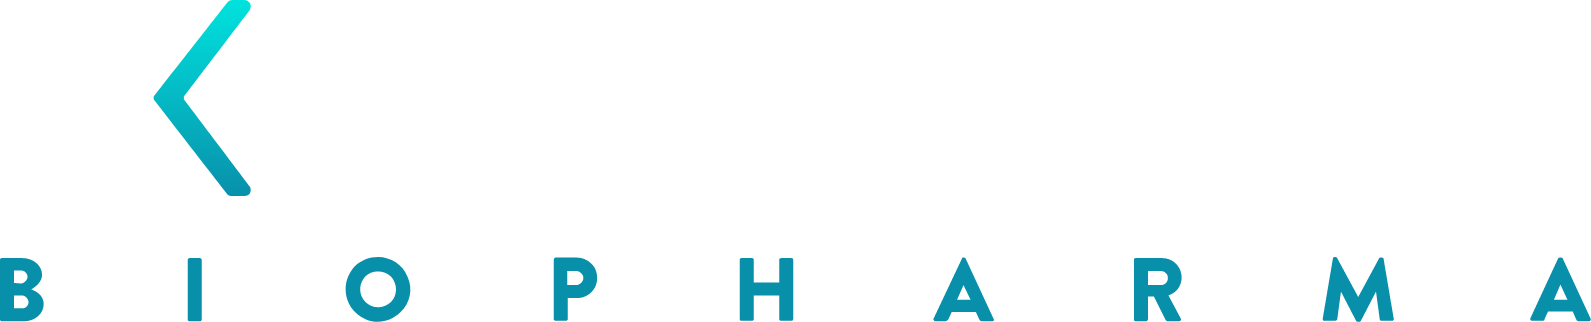 Kinnate Biopharma logo grand pour les fonds sombres (PNG transparent)